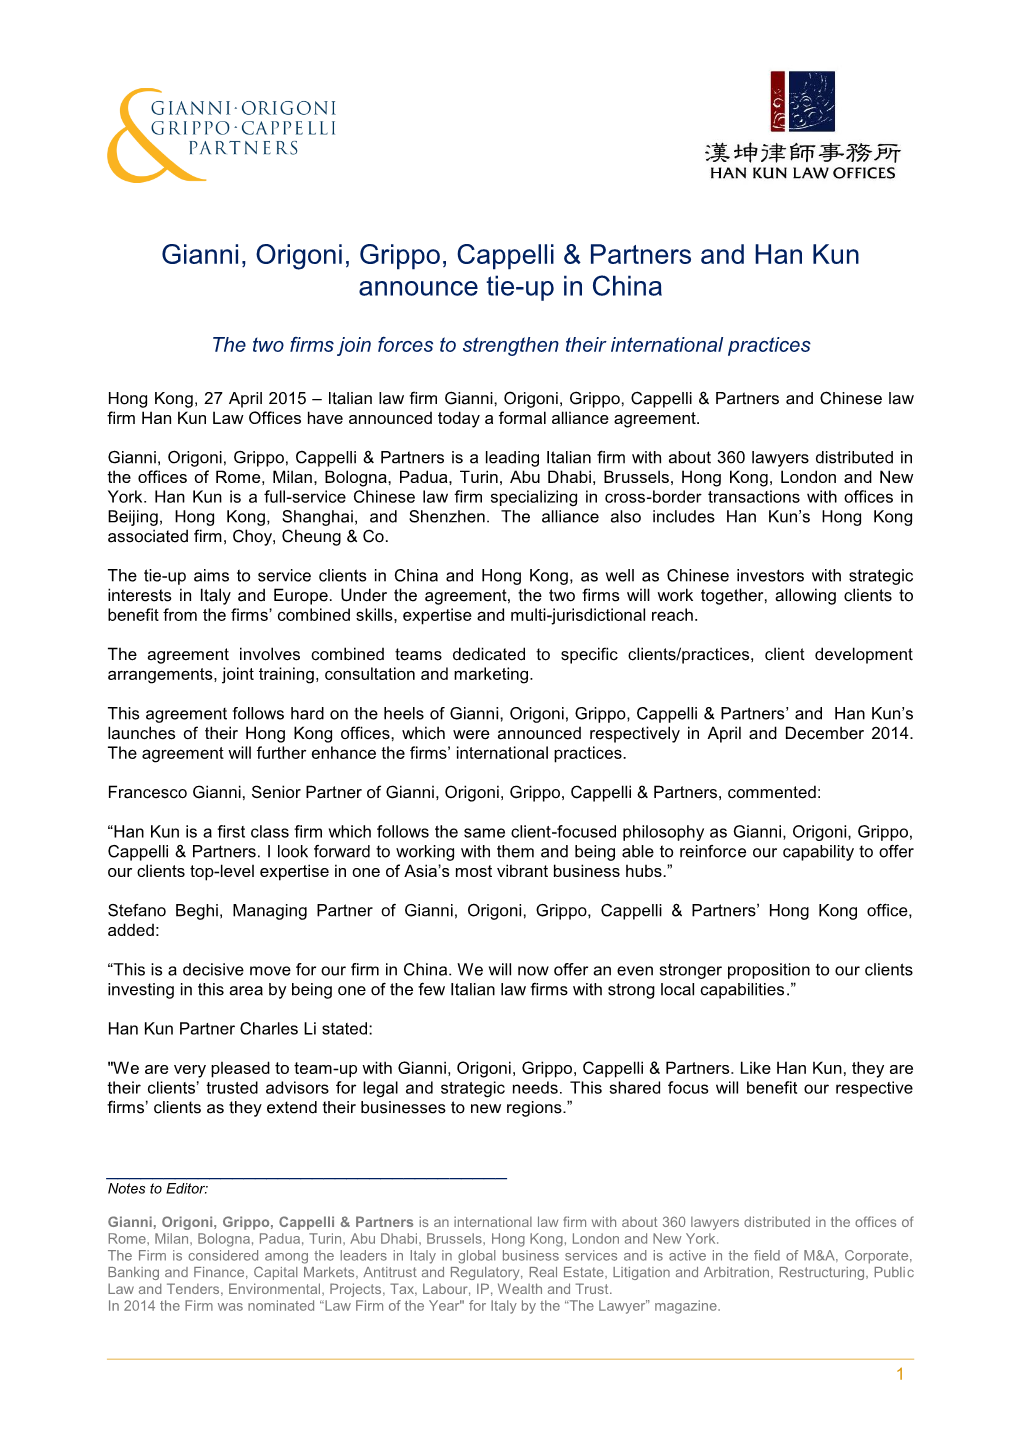 Gianni, Origoni, Grippo, Cappelli & Partners and Han Kun Announce Tie